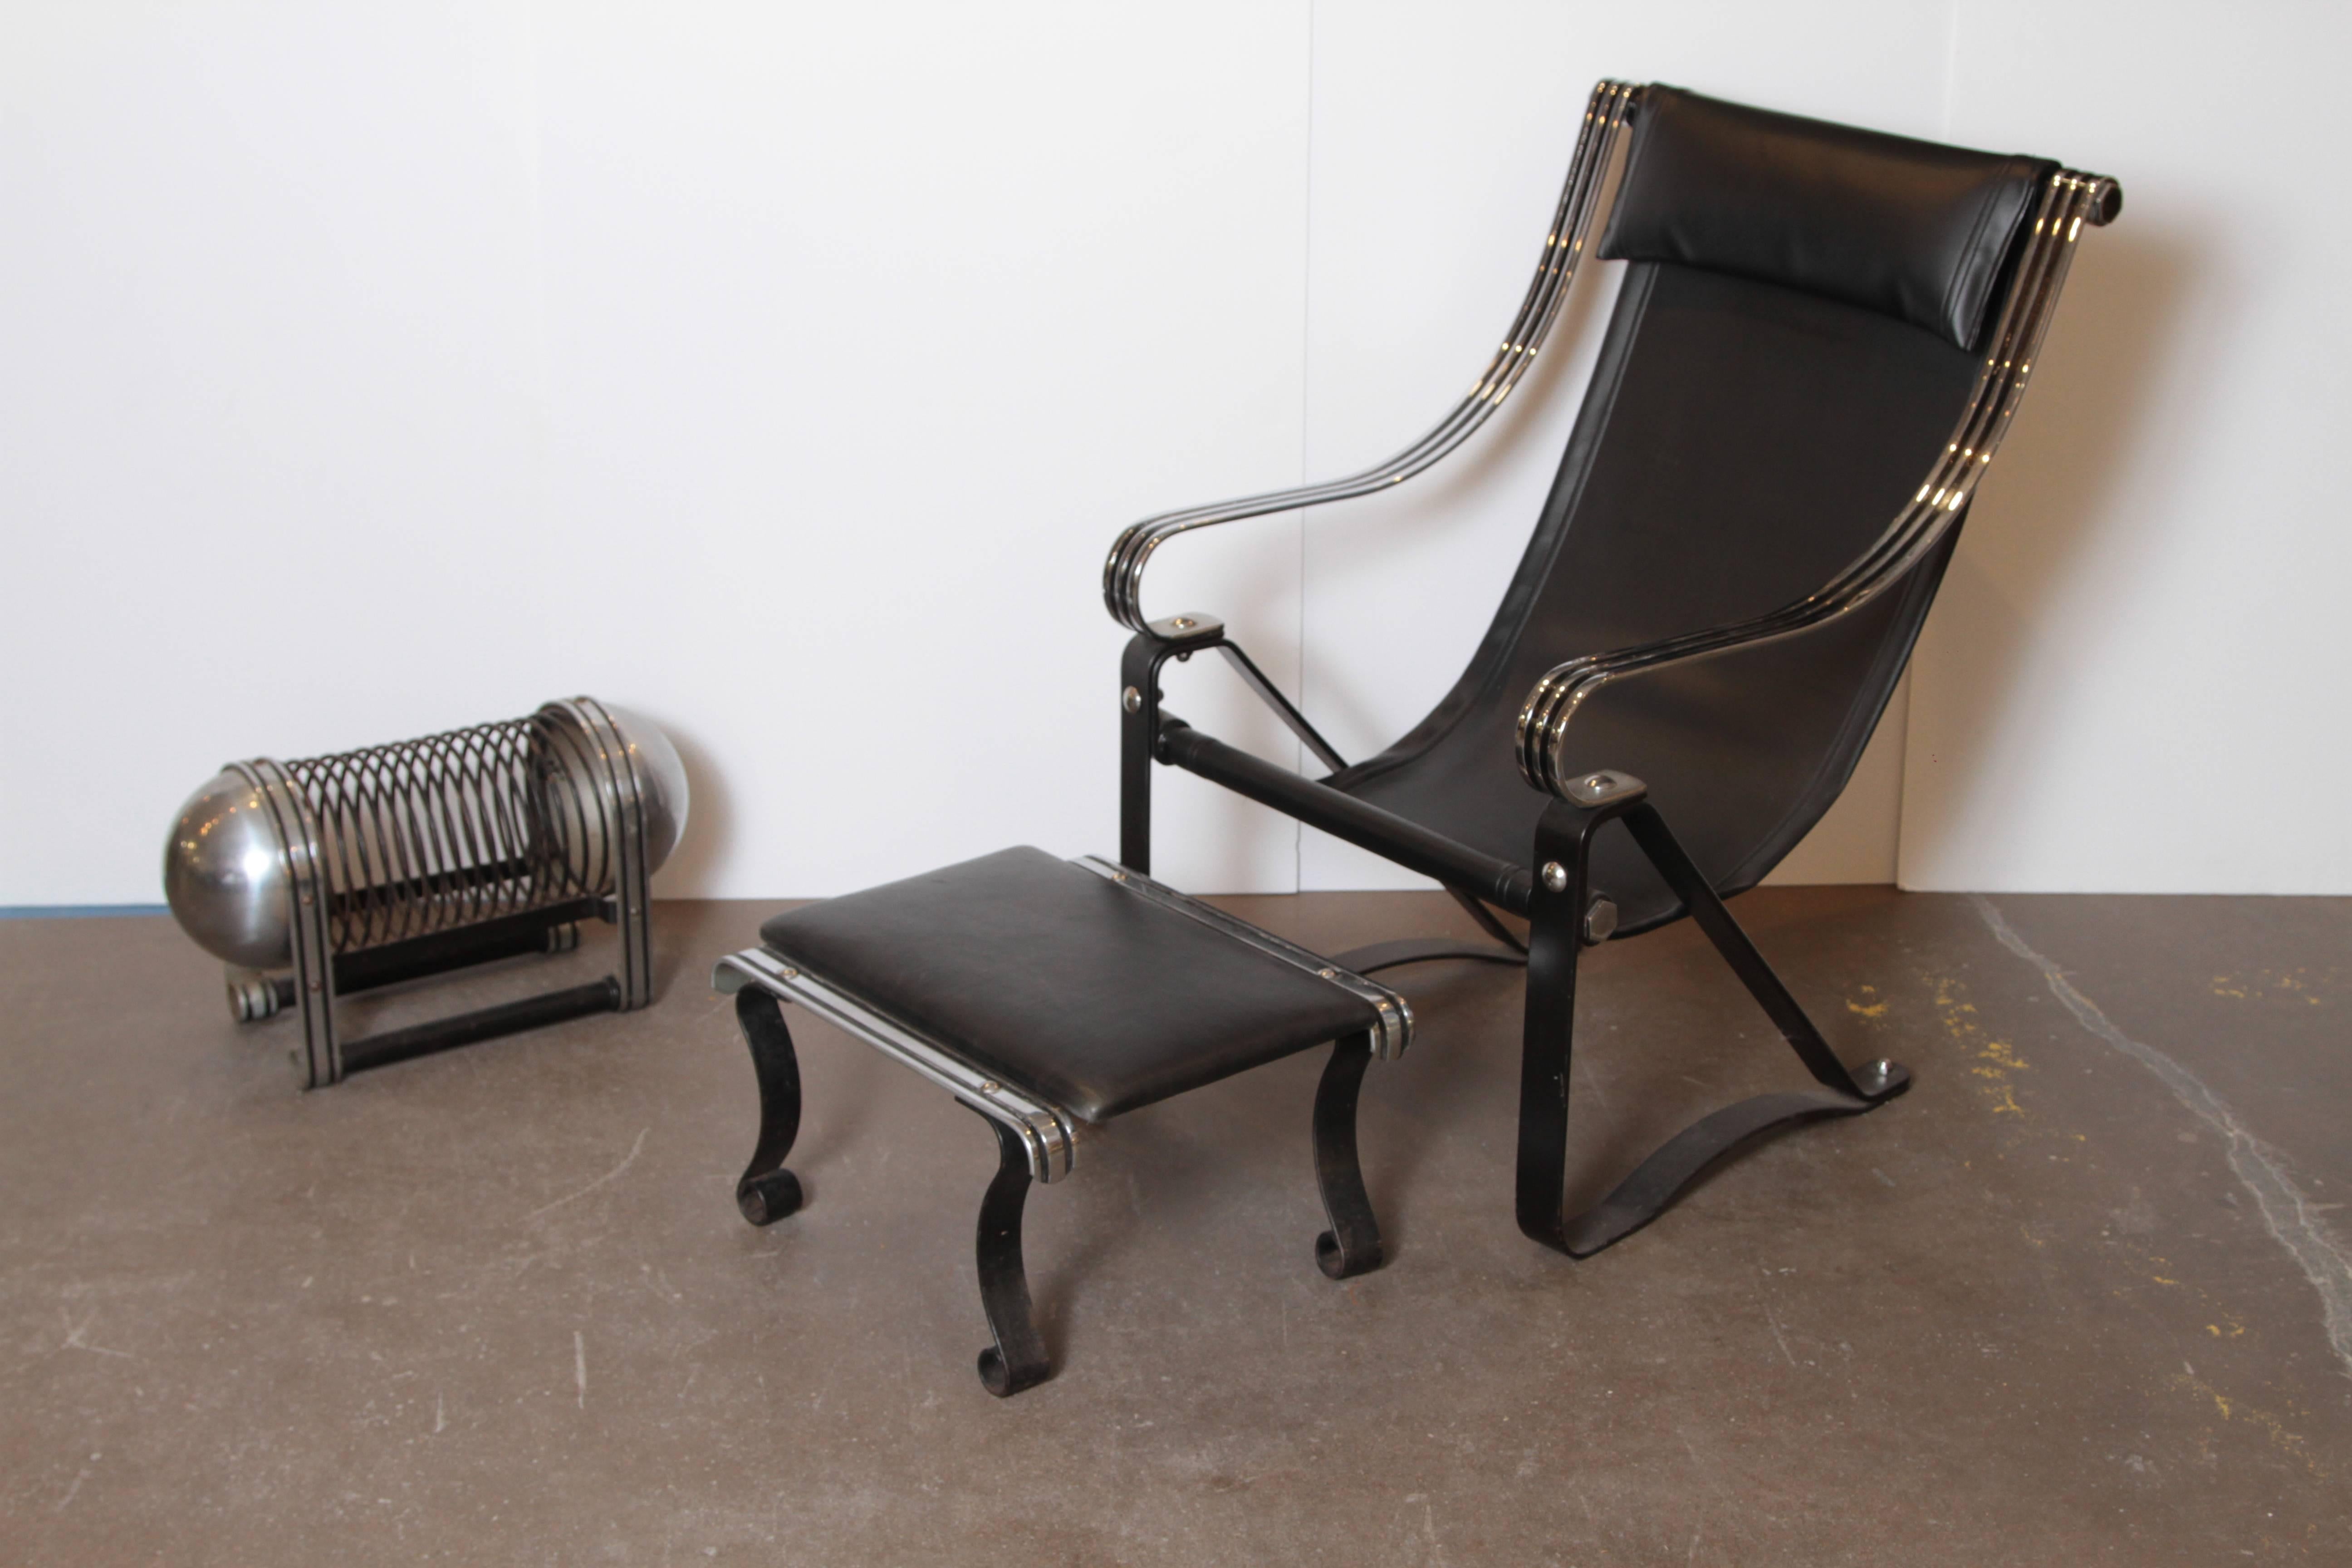 McKay Craft Machine Age Art Deco Lounge Suite: Chair/ Ottoman/ Magazine Rack In Good Condition For Sale In Dallas, TX